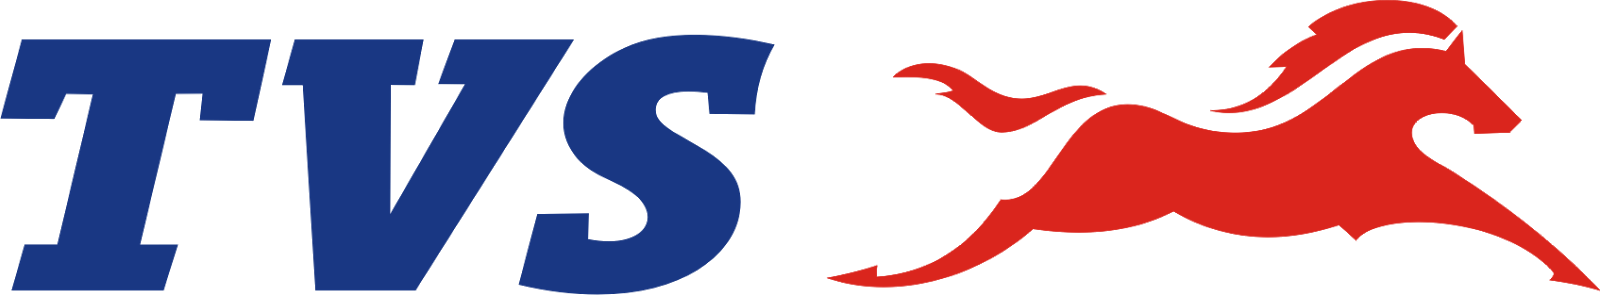 logo tvs motor company indonesia logo lambang indonesia #33710